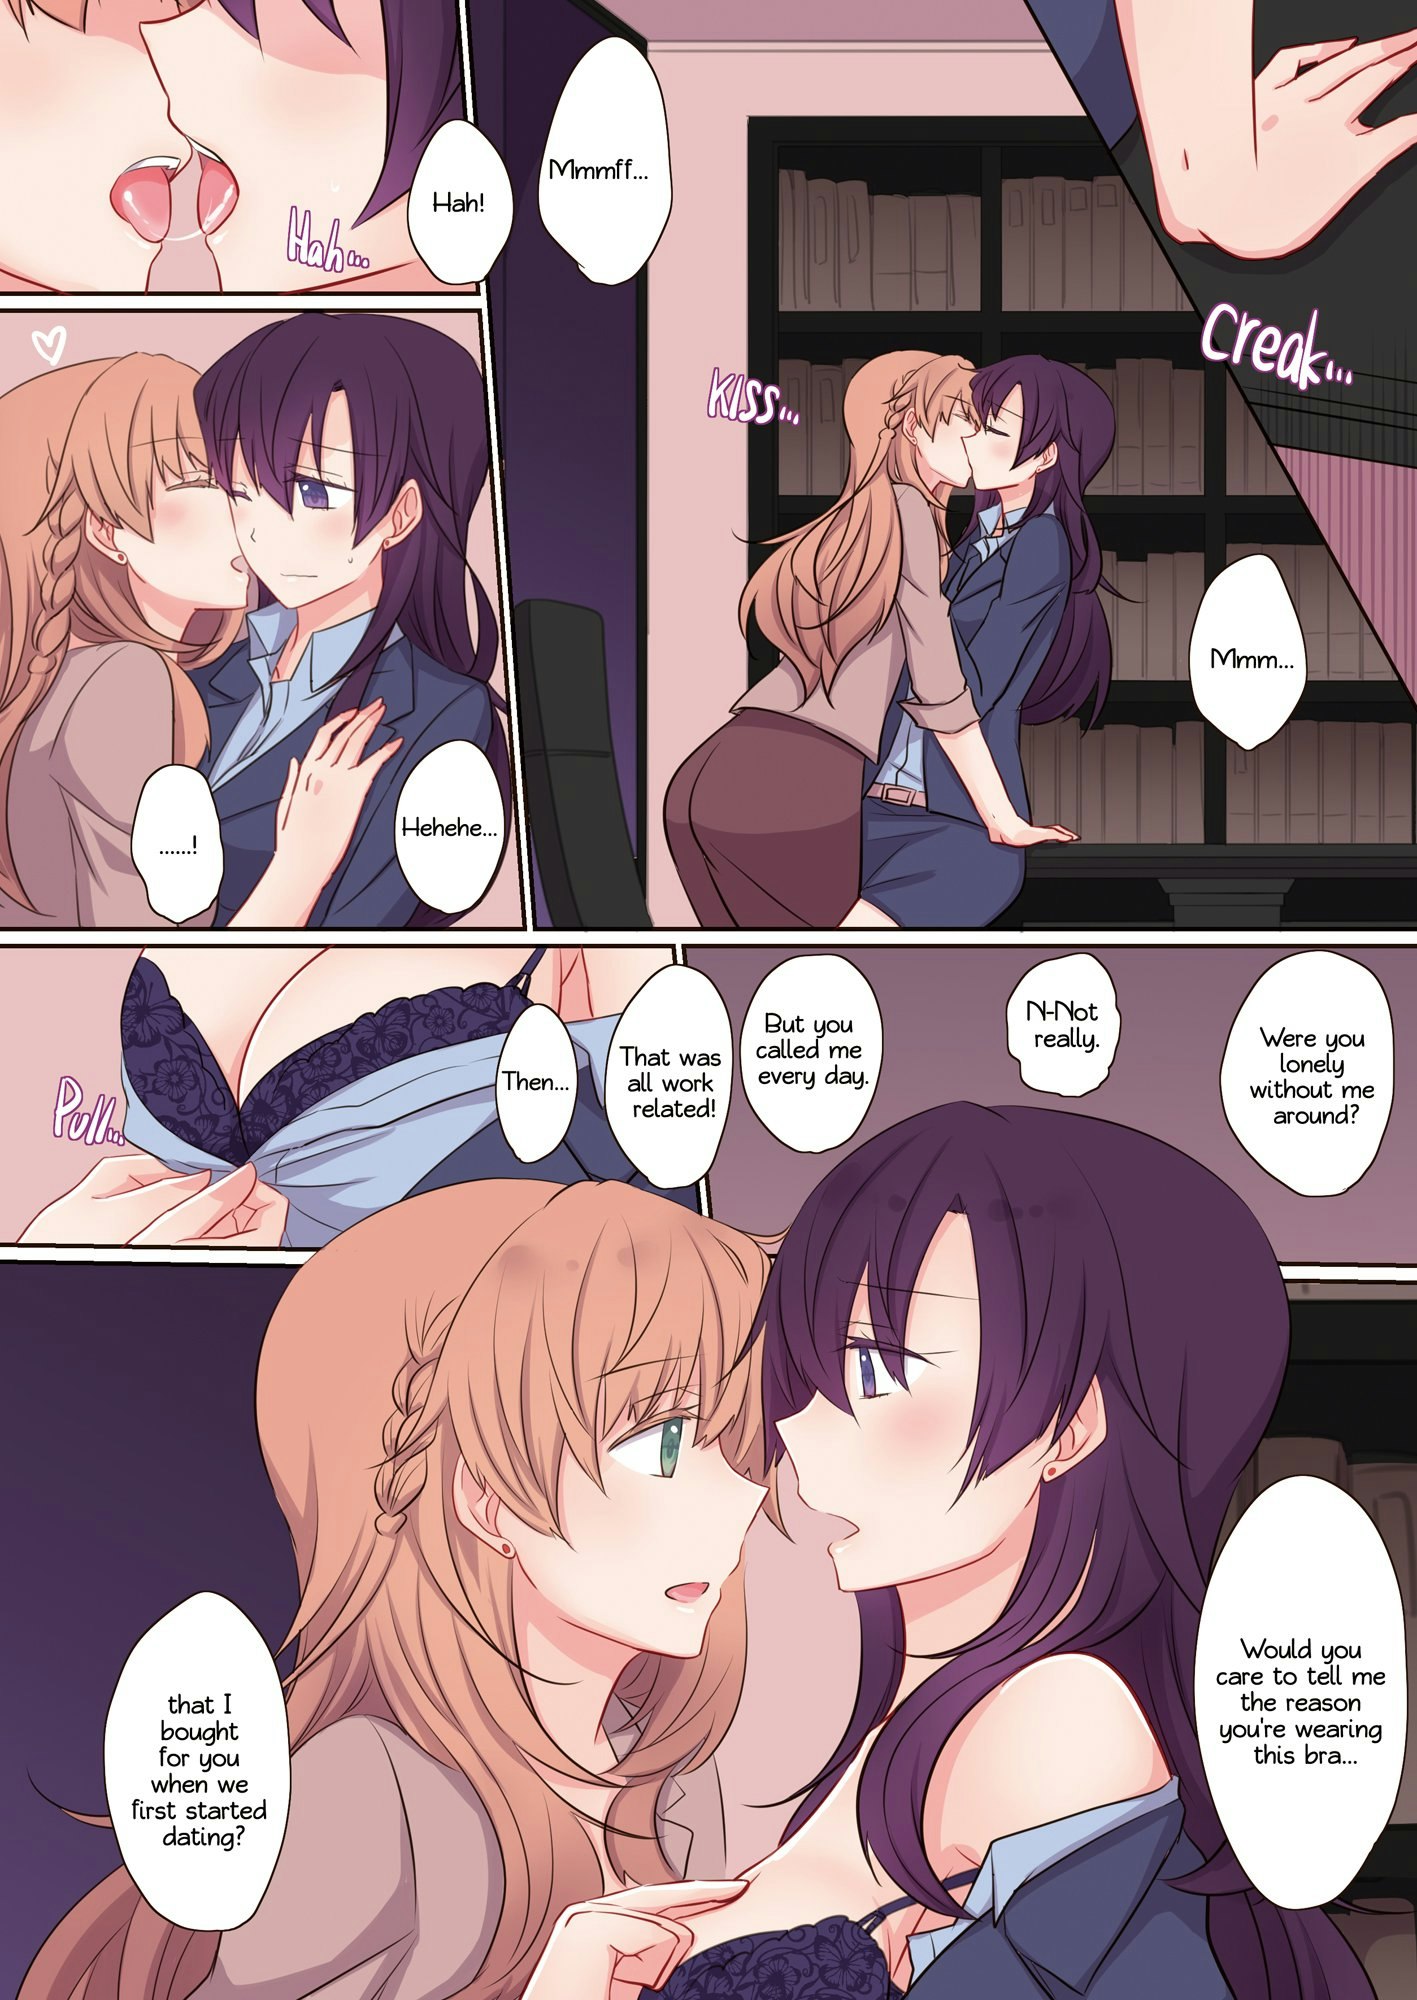 Hentai Lesbian Pics